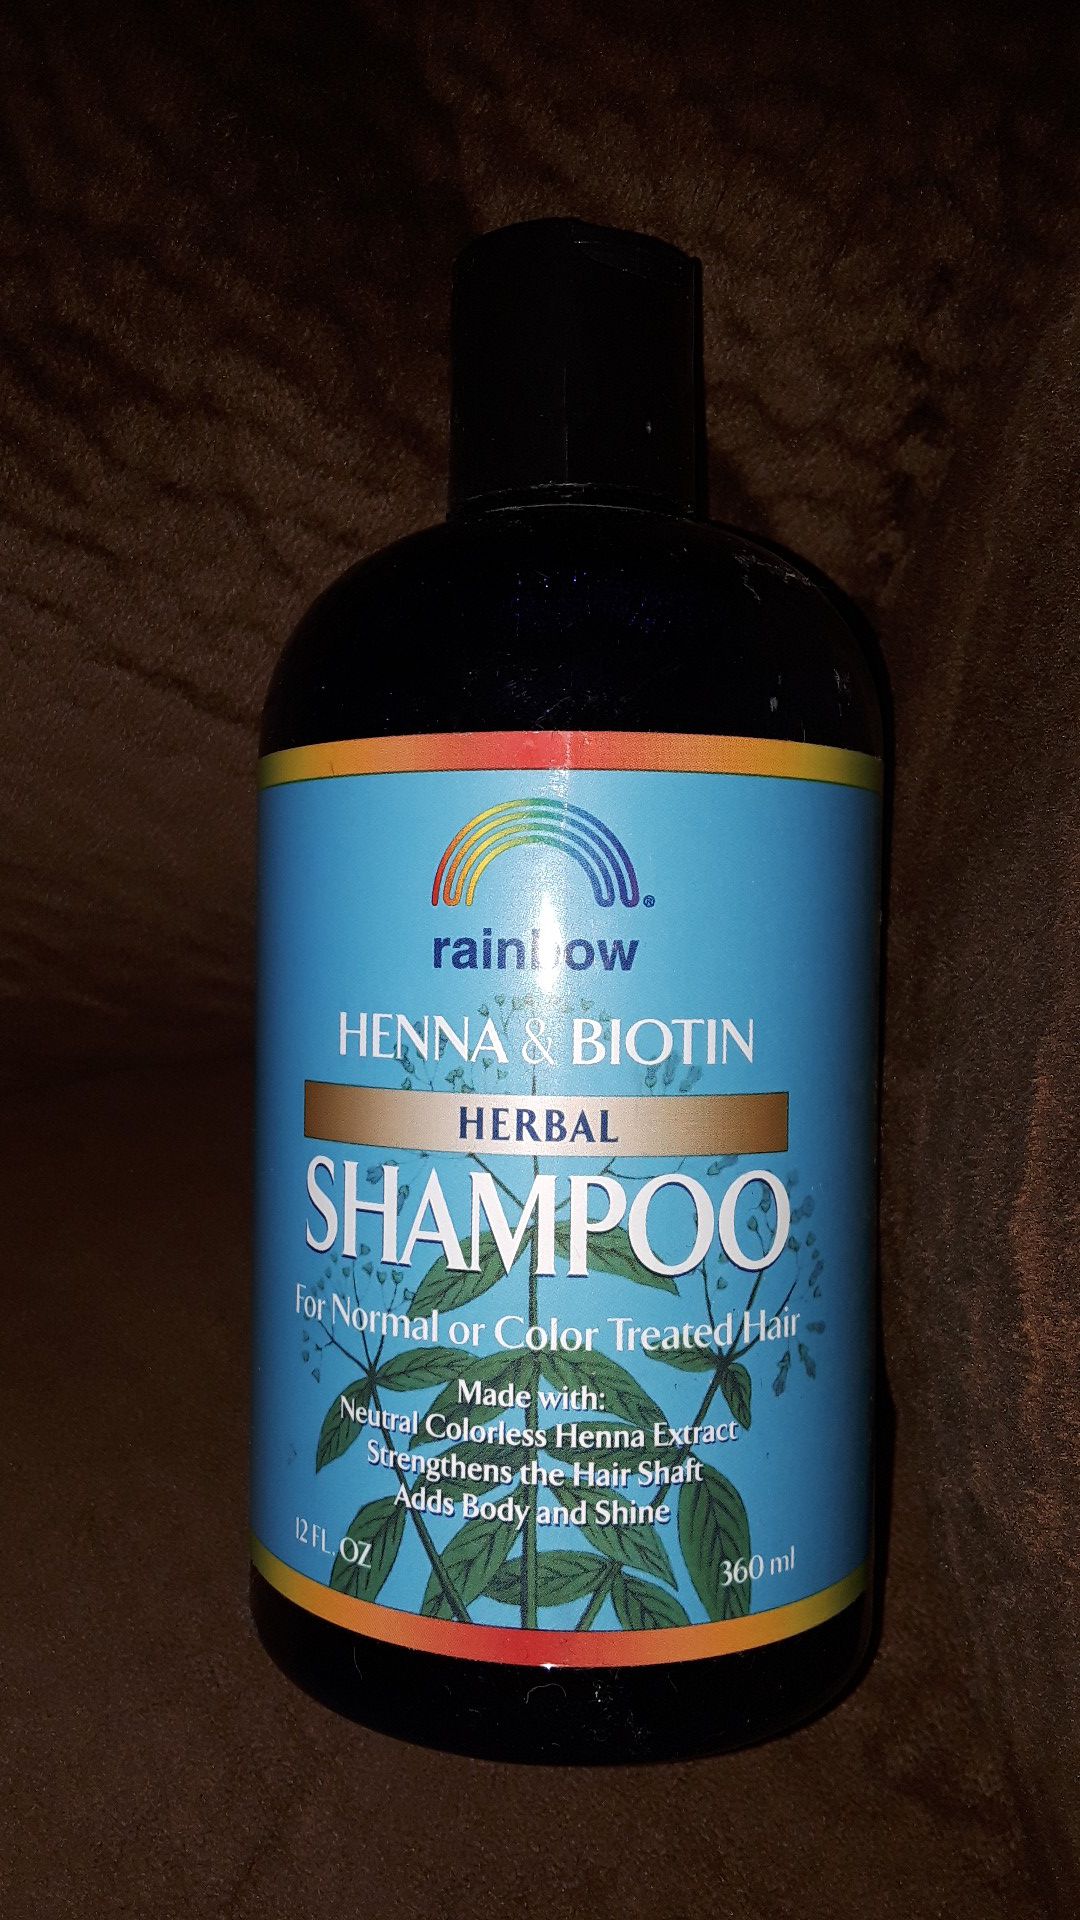 Henna & Biotin shampoo